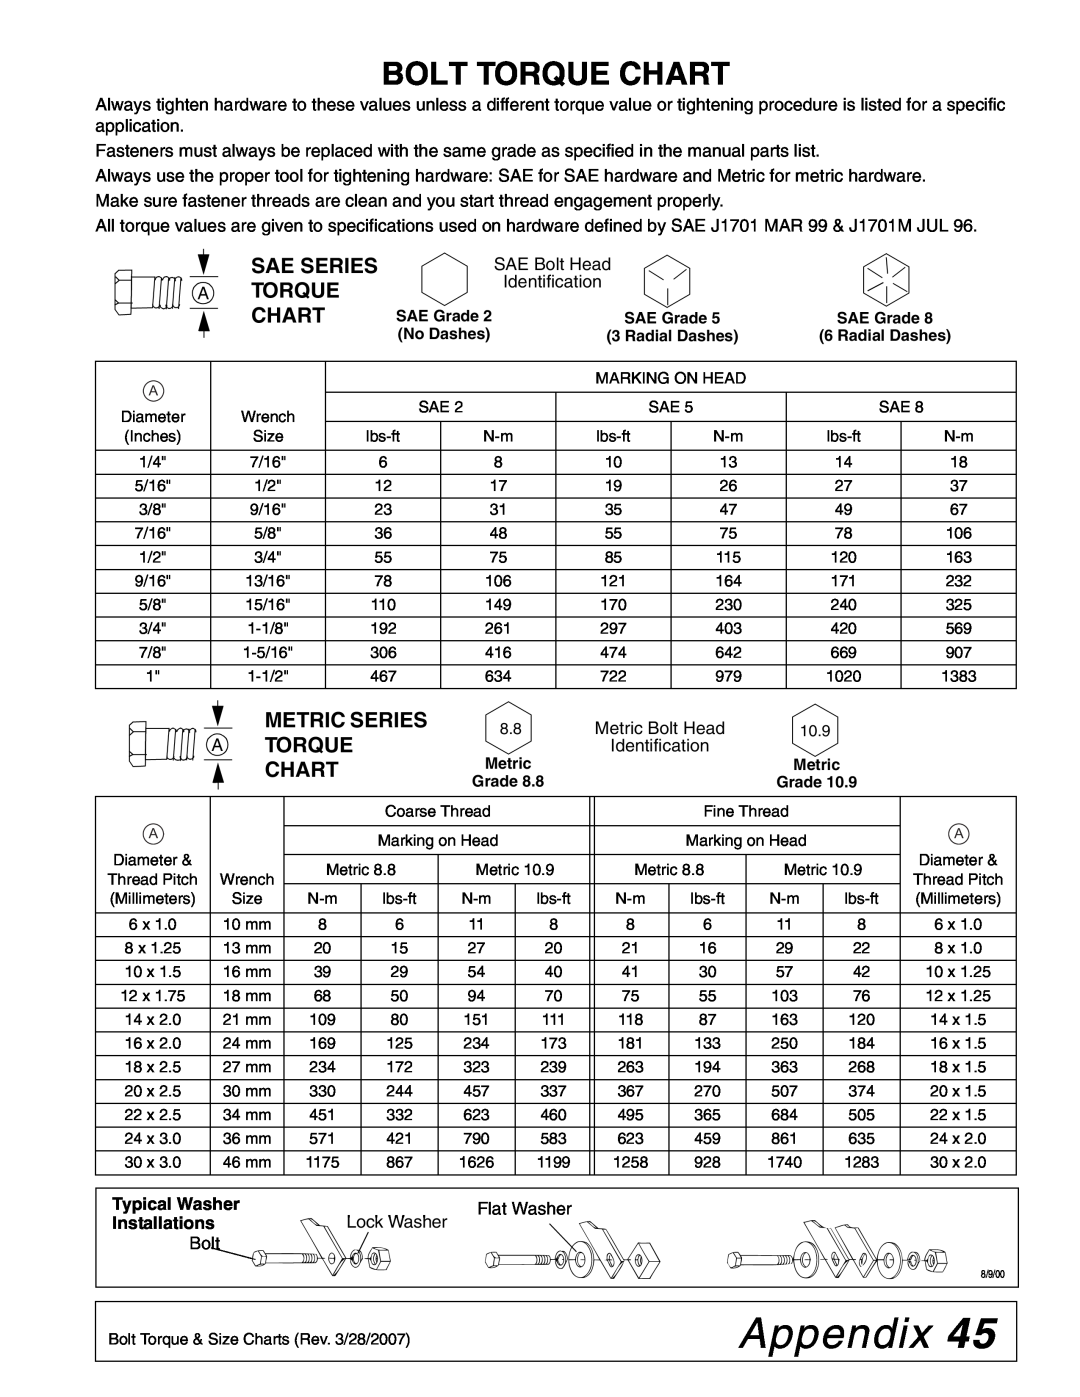 Woods Equipment BB7200X, MAN0680 manual Appendix, Bolt Torque Chart, Sae Series A Torque Chart, Metric Series A Torque Chart 